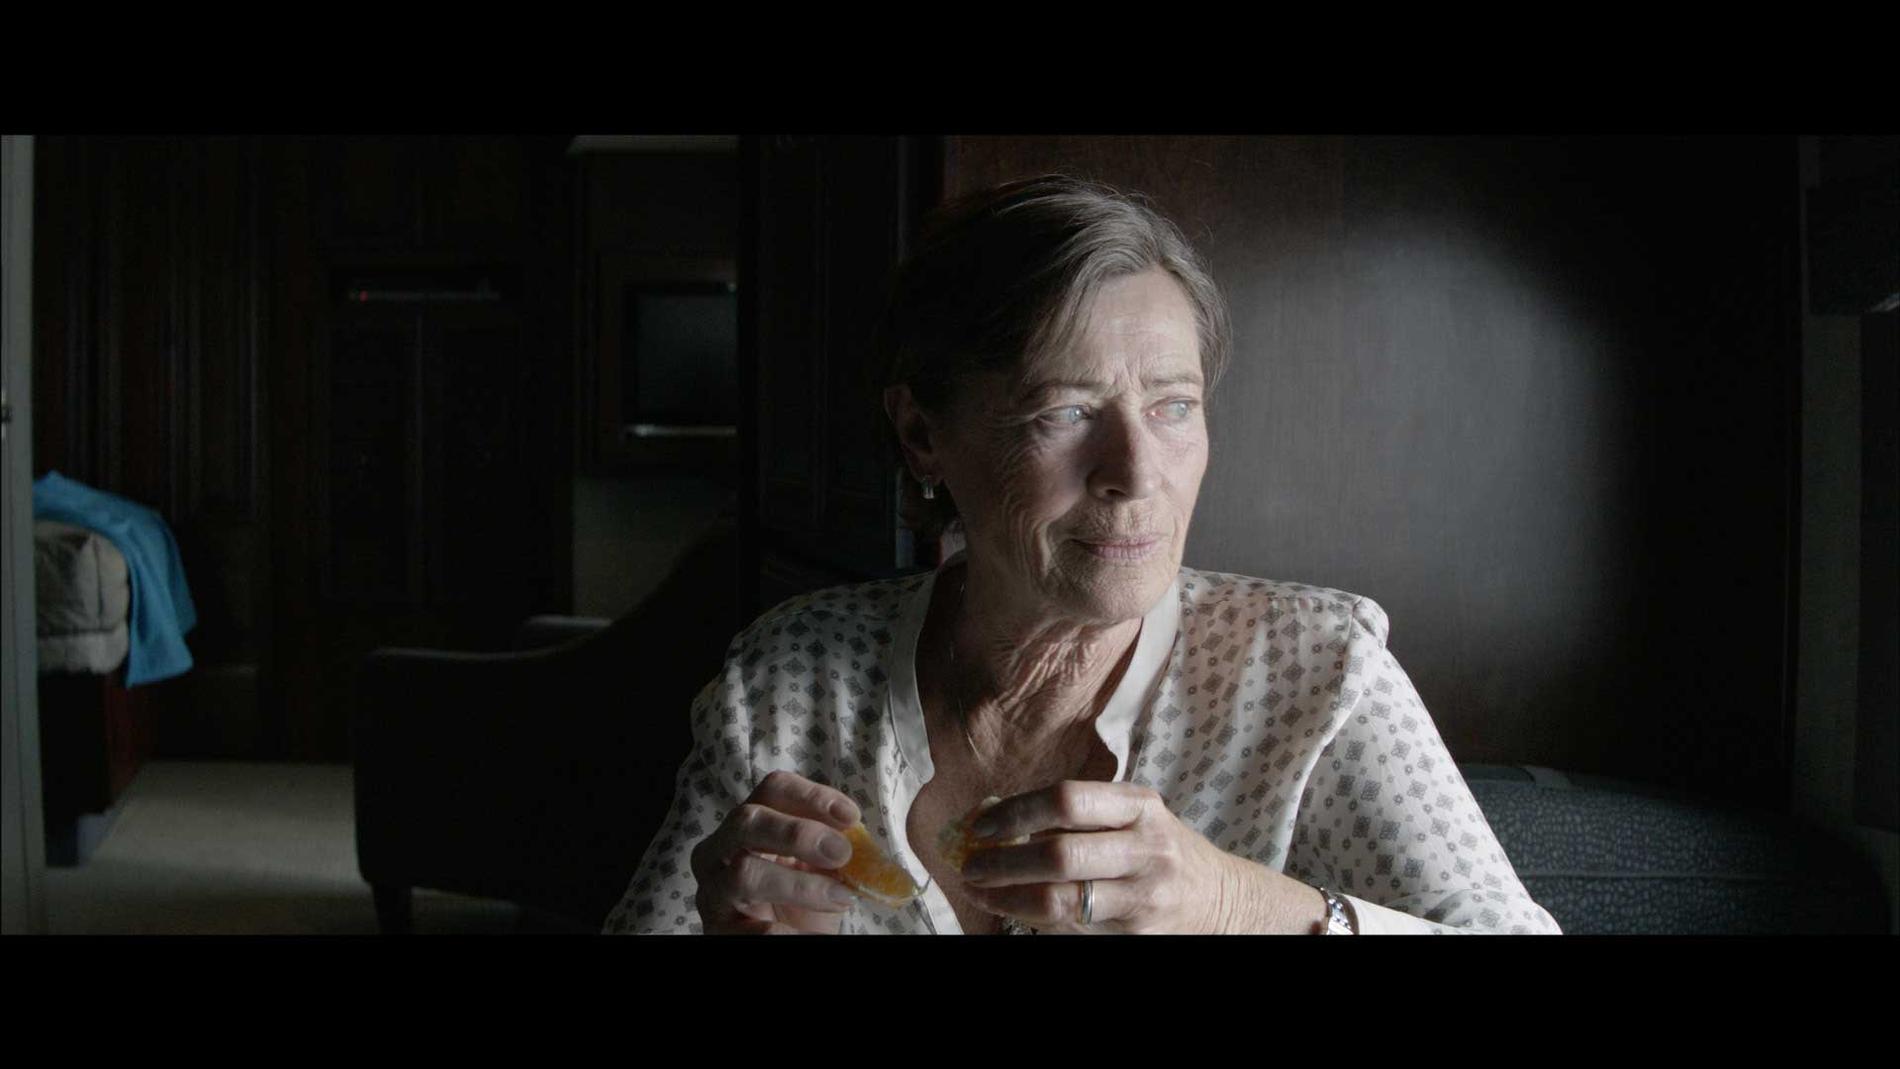 Evabritt i filmen ”The quiet roar” som ”Marianne”.